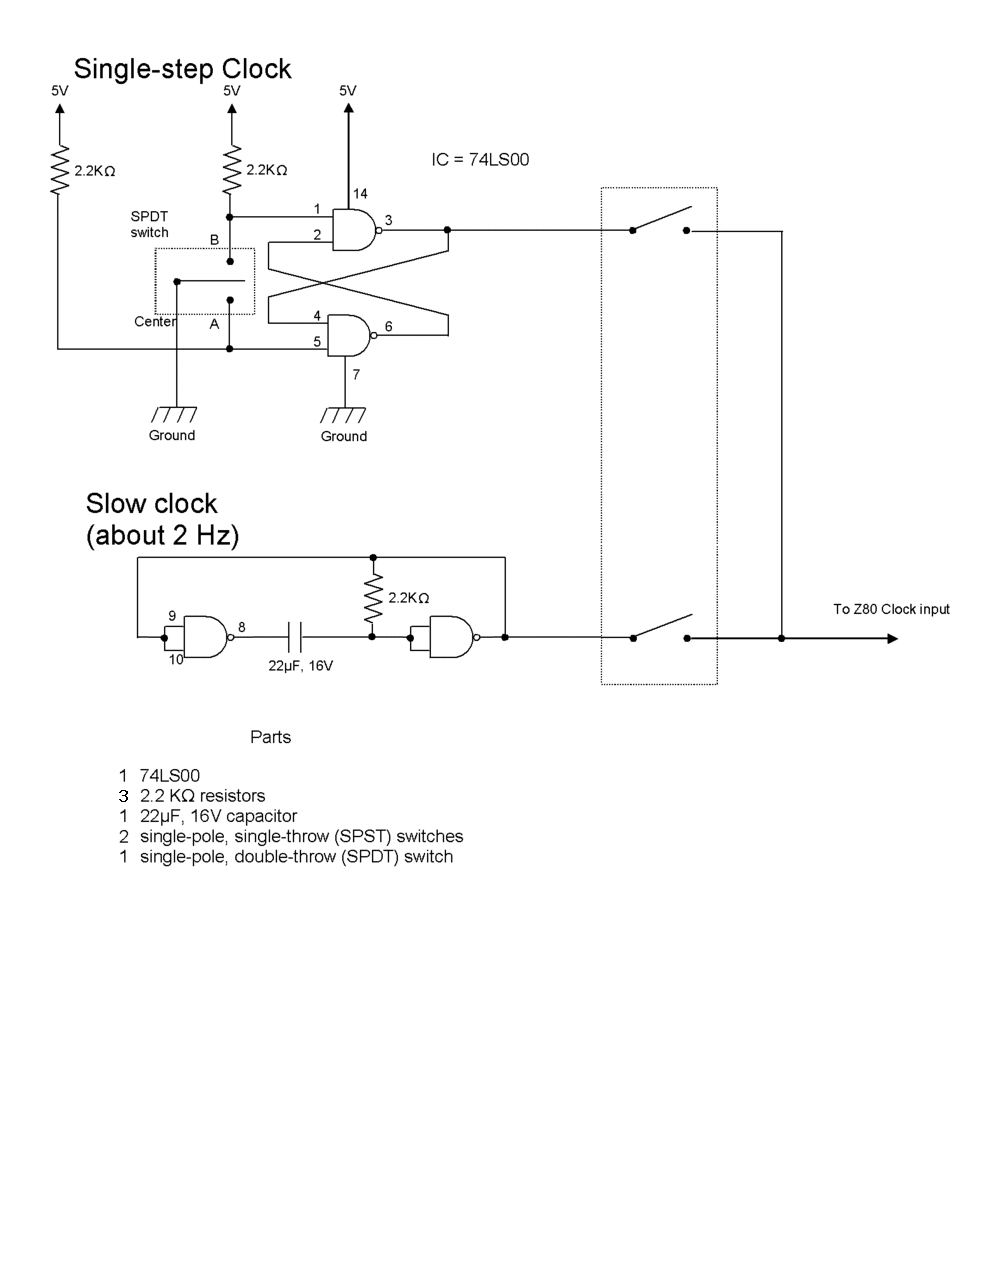 schematic_2 (modified).gif